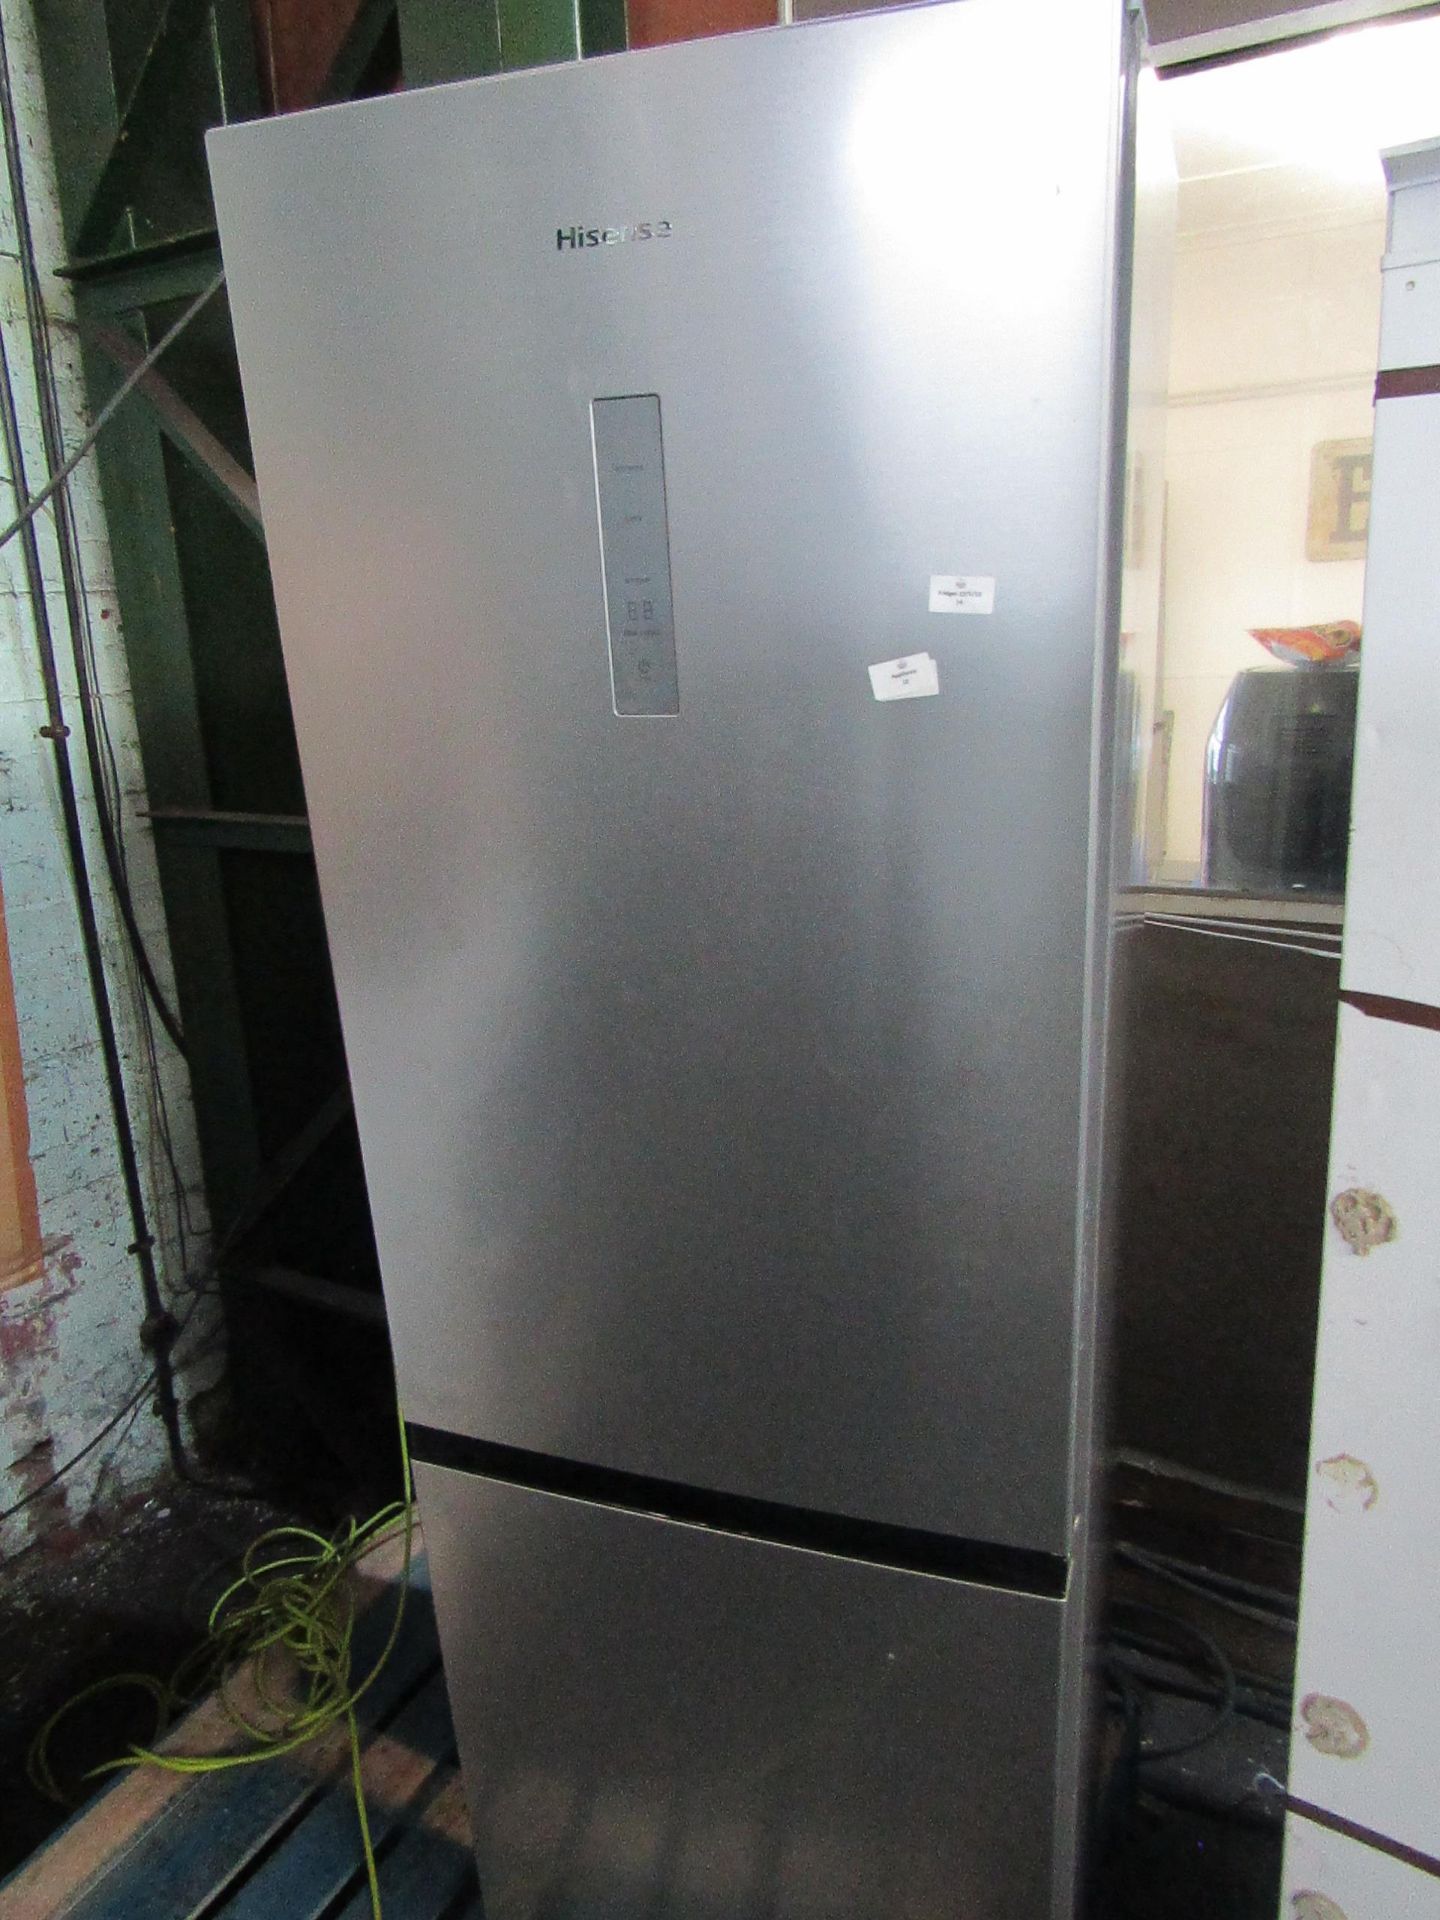 Hisense 60/40 fridge freezer, could do with a wipe over but no major damage, Both Fridge and Freezer